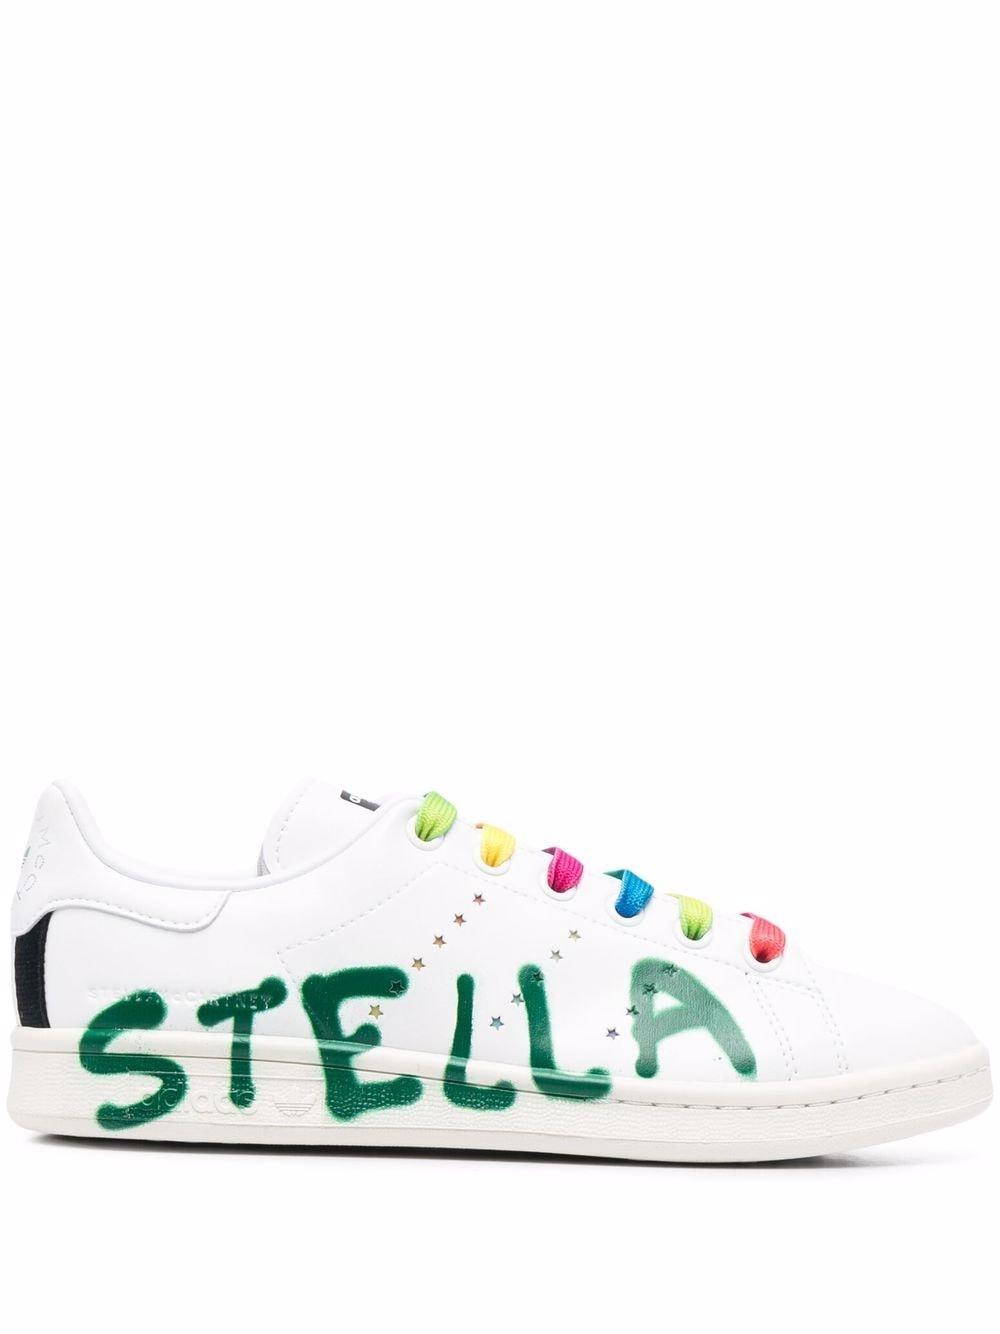 Sund mad hage Långiver Stella McCartney X Ed Curtis Stan Smith Vegan Sneakers in White | Lyst